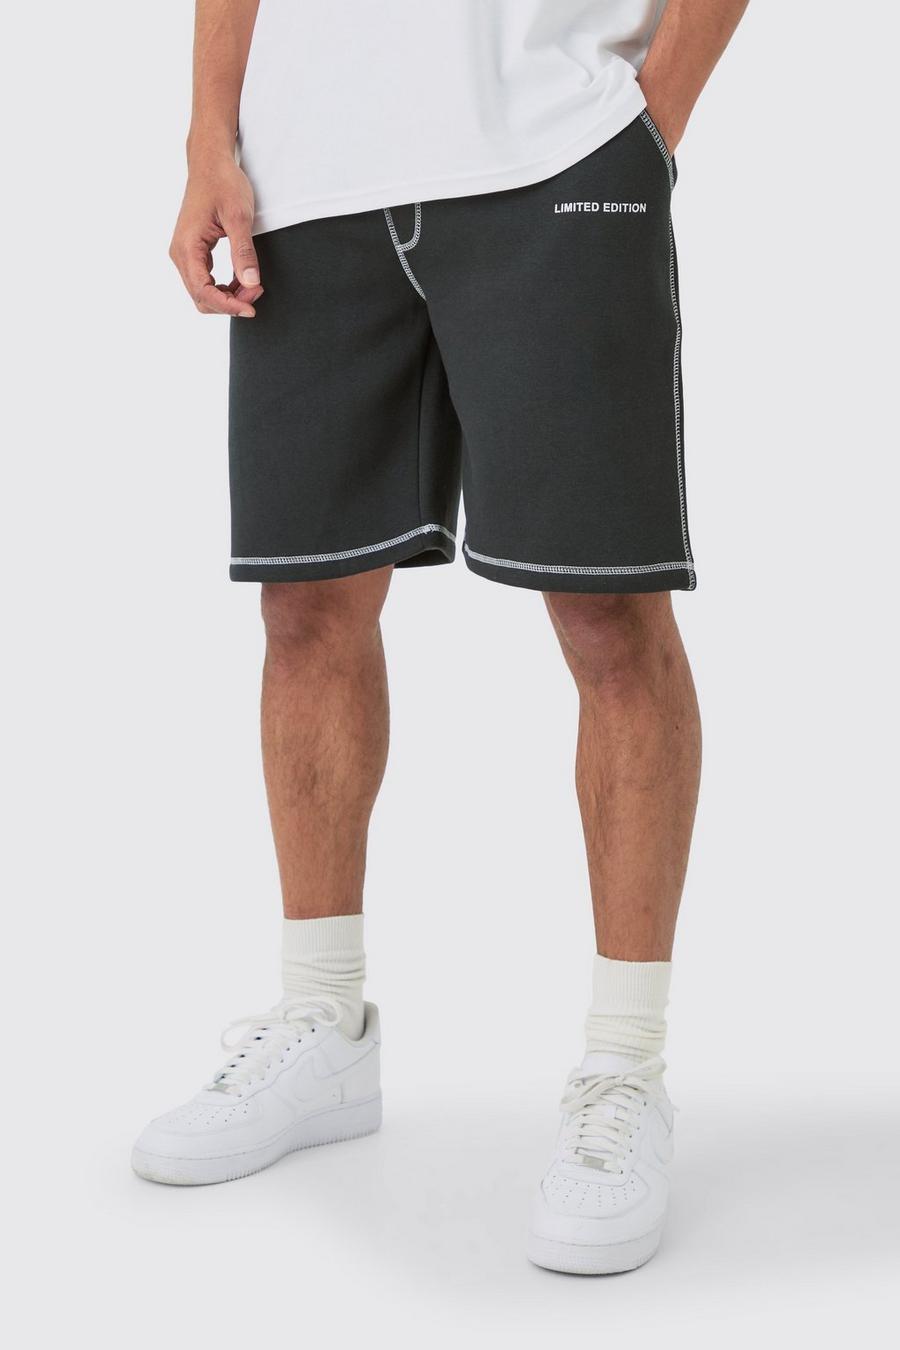 Lockere Limited Edition Shorts mit Kontrast-Naht, Black